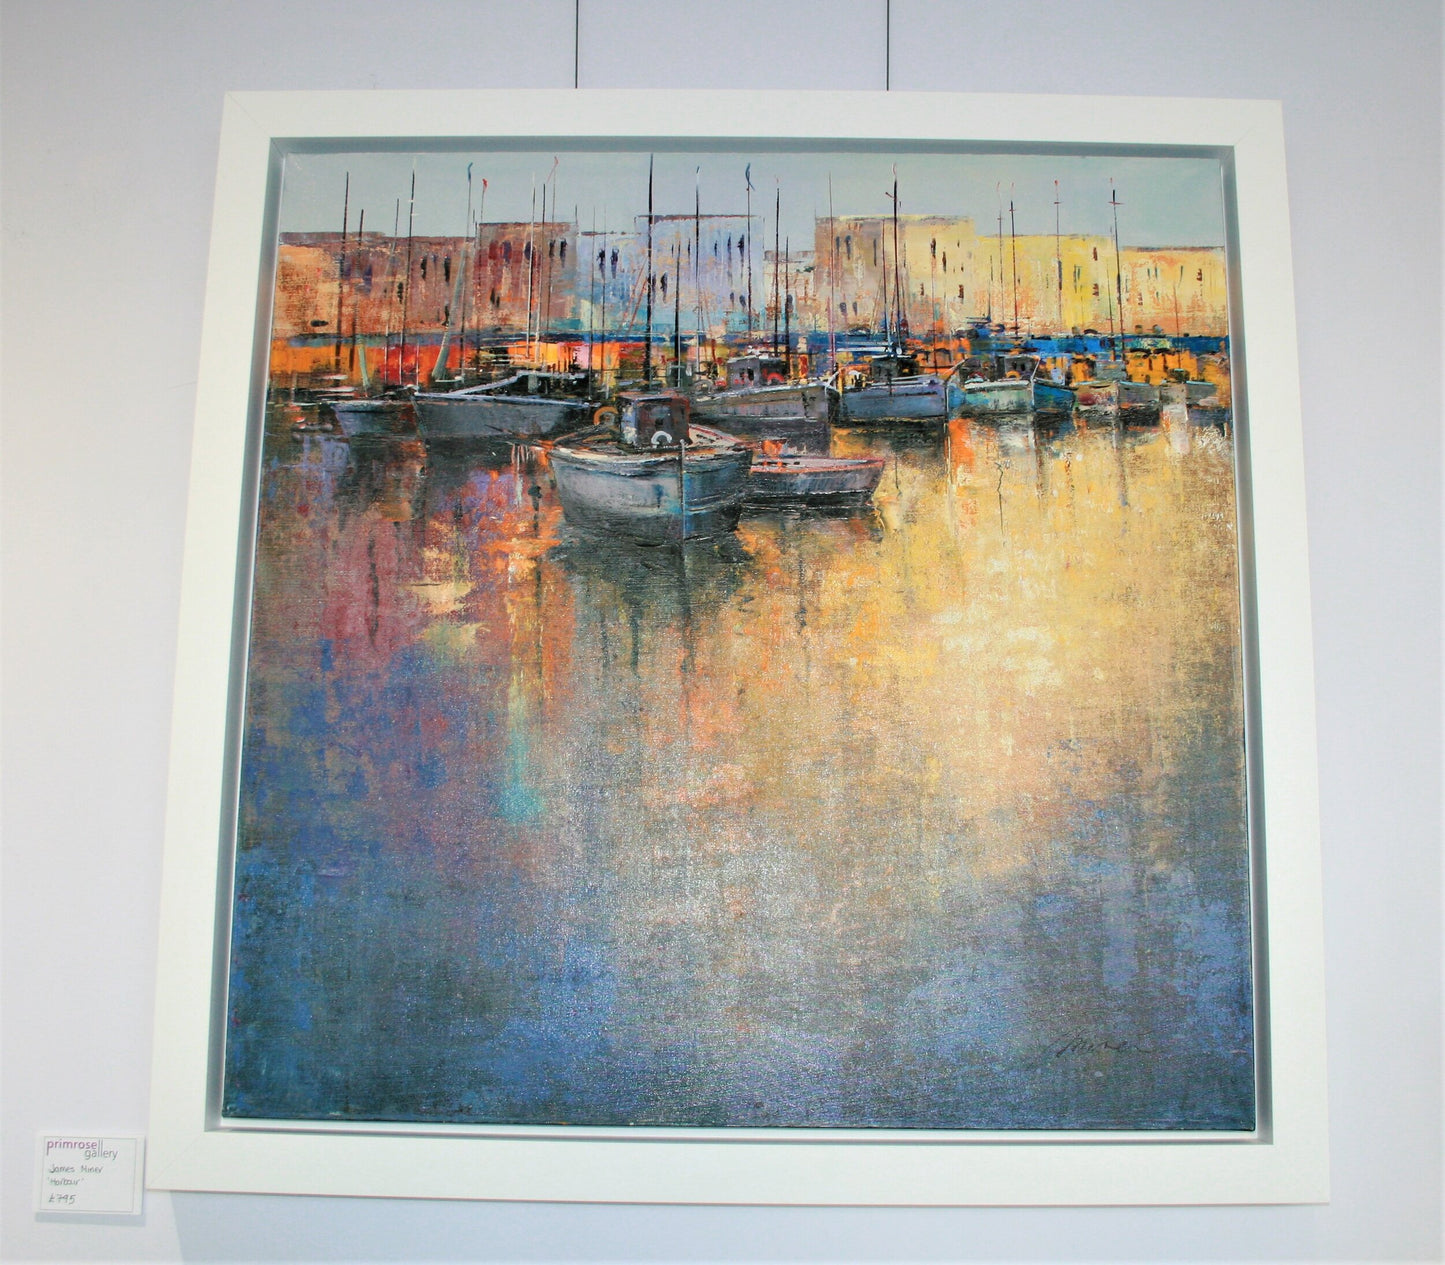 James Miner- Harbour - Primrose Gallery